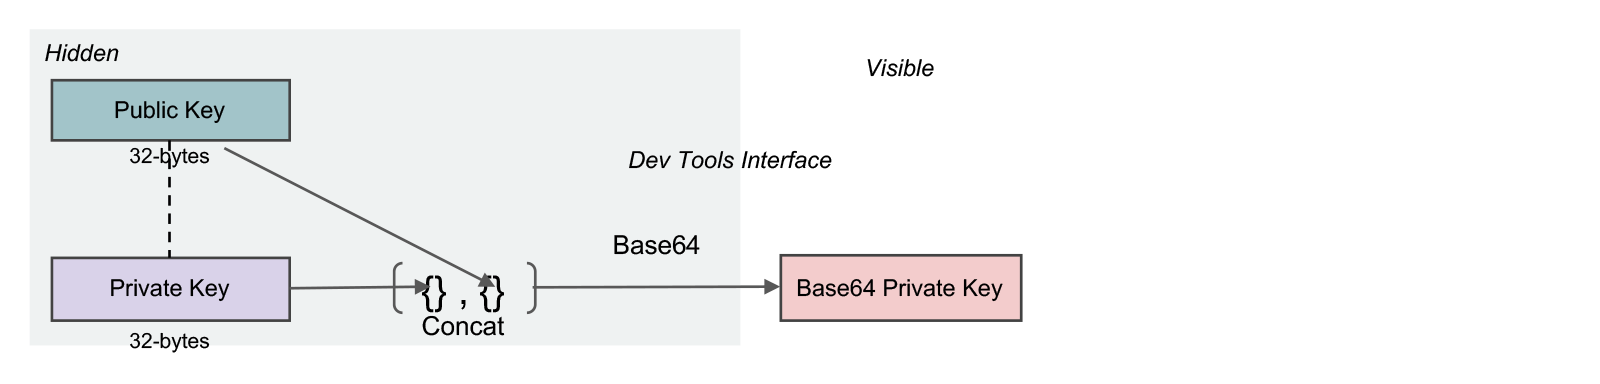 base64 private key